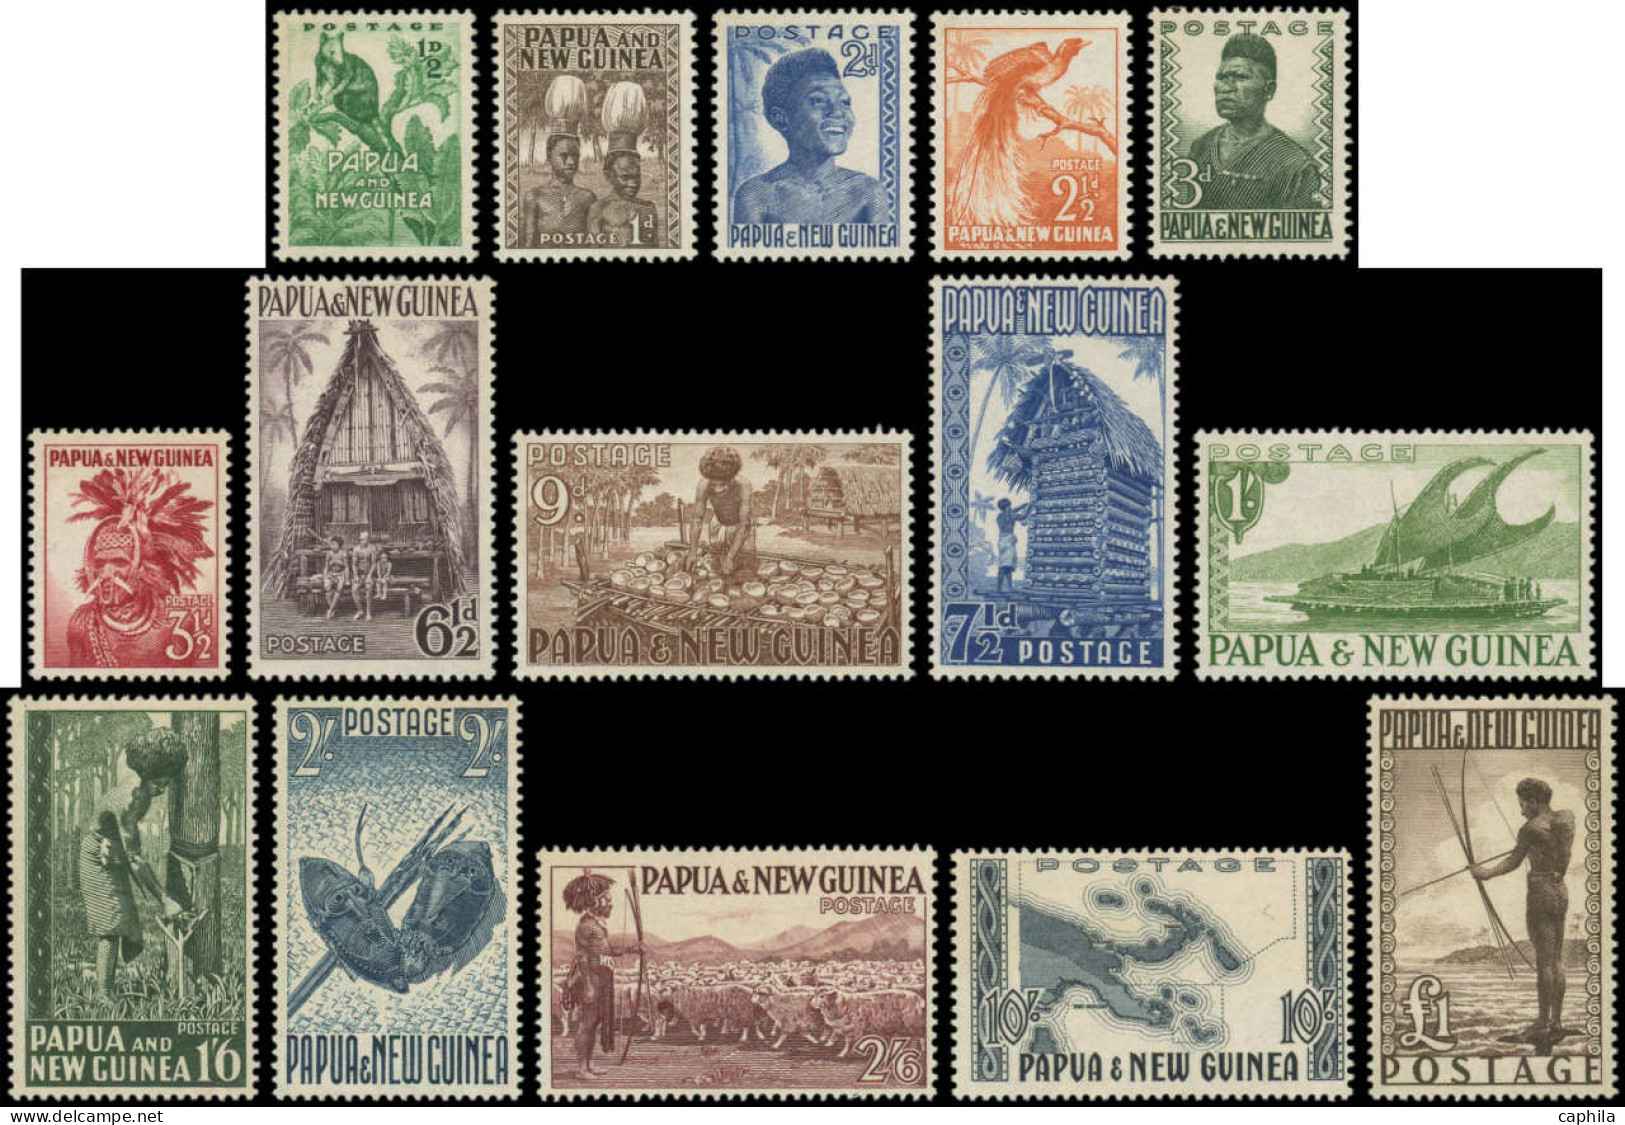 ** PAPOUASIE NLE GUINEE - Poste - 1/15, Complet 15 Valeurs: Série Courante - Papua Nuova Guinea